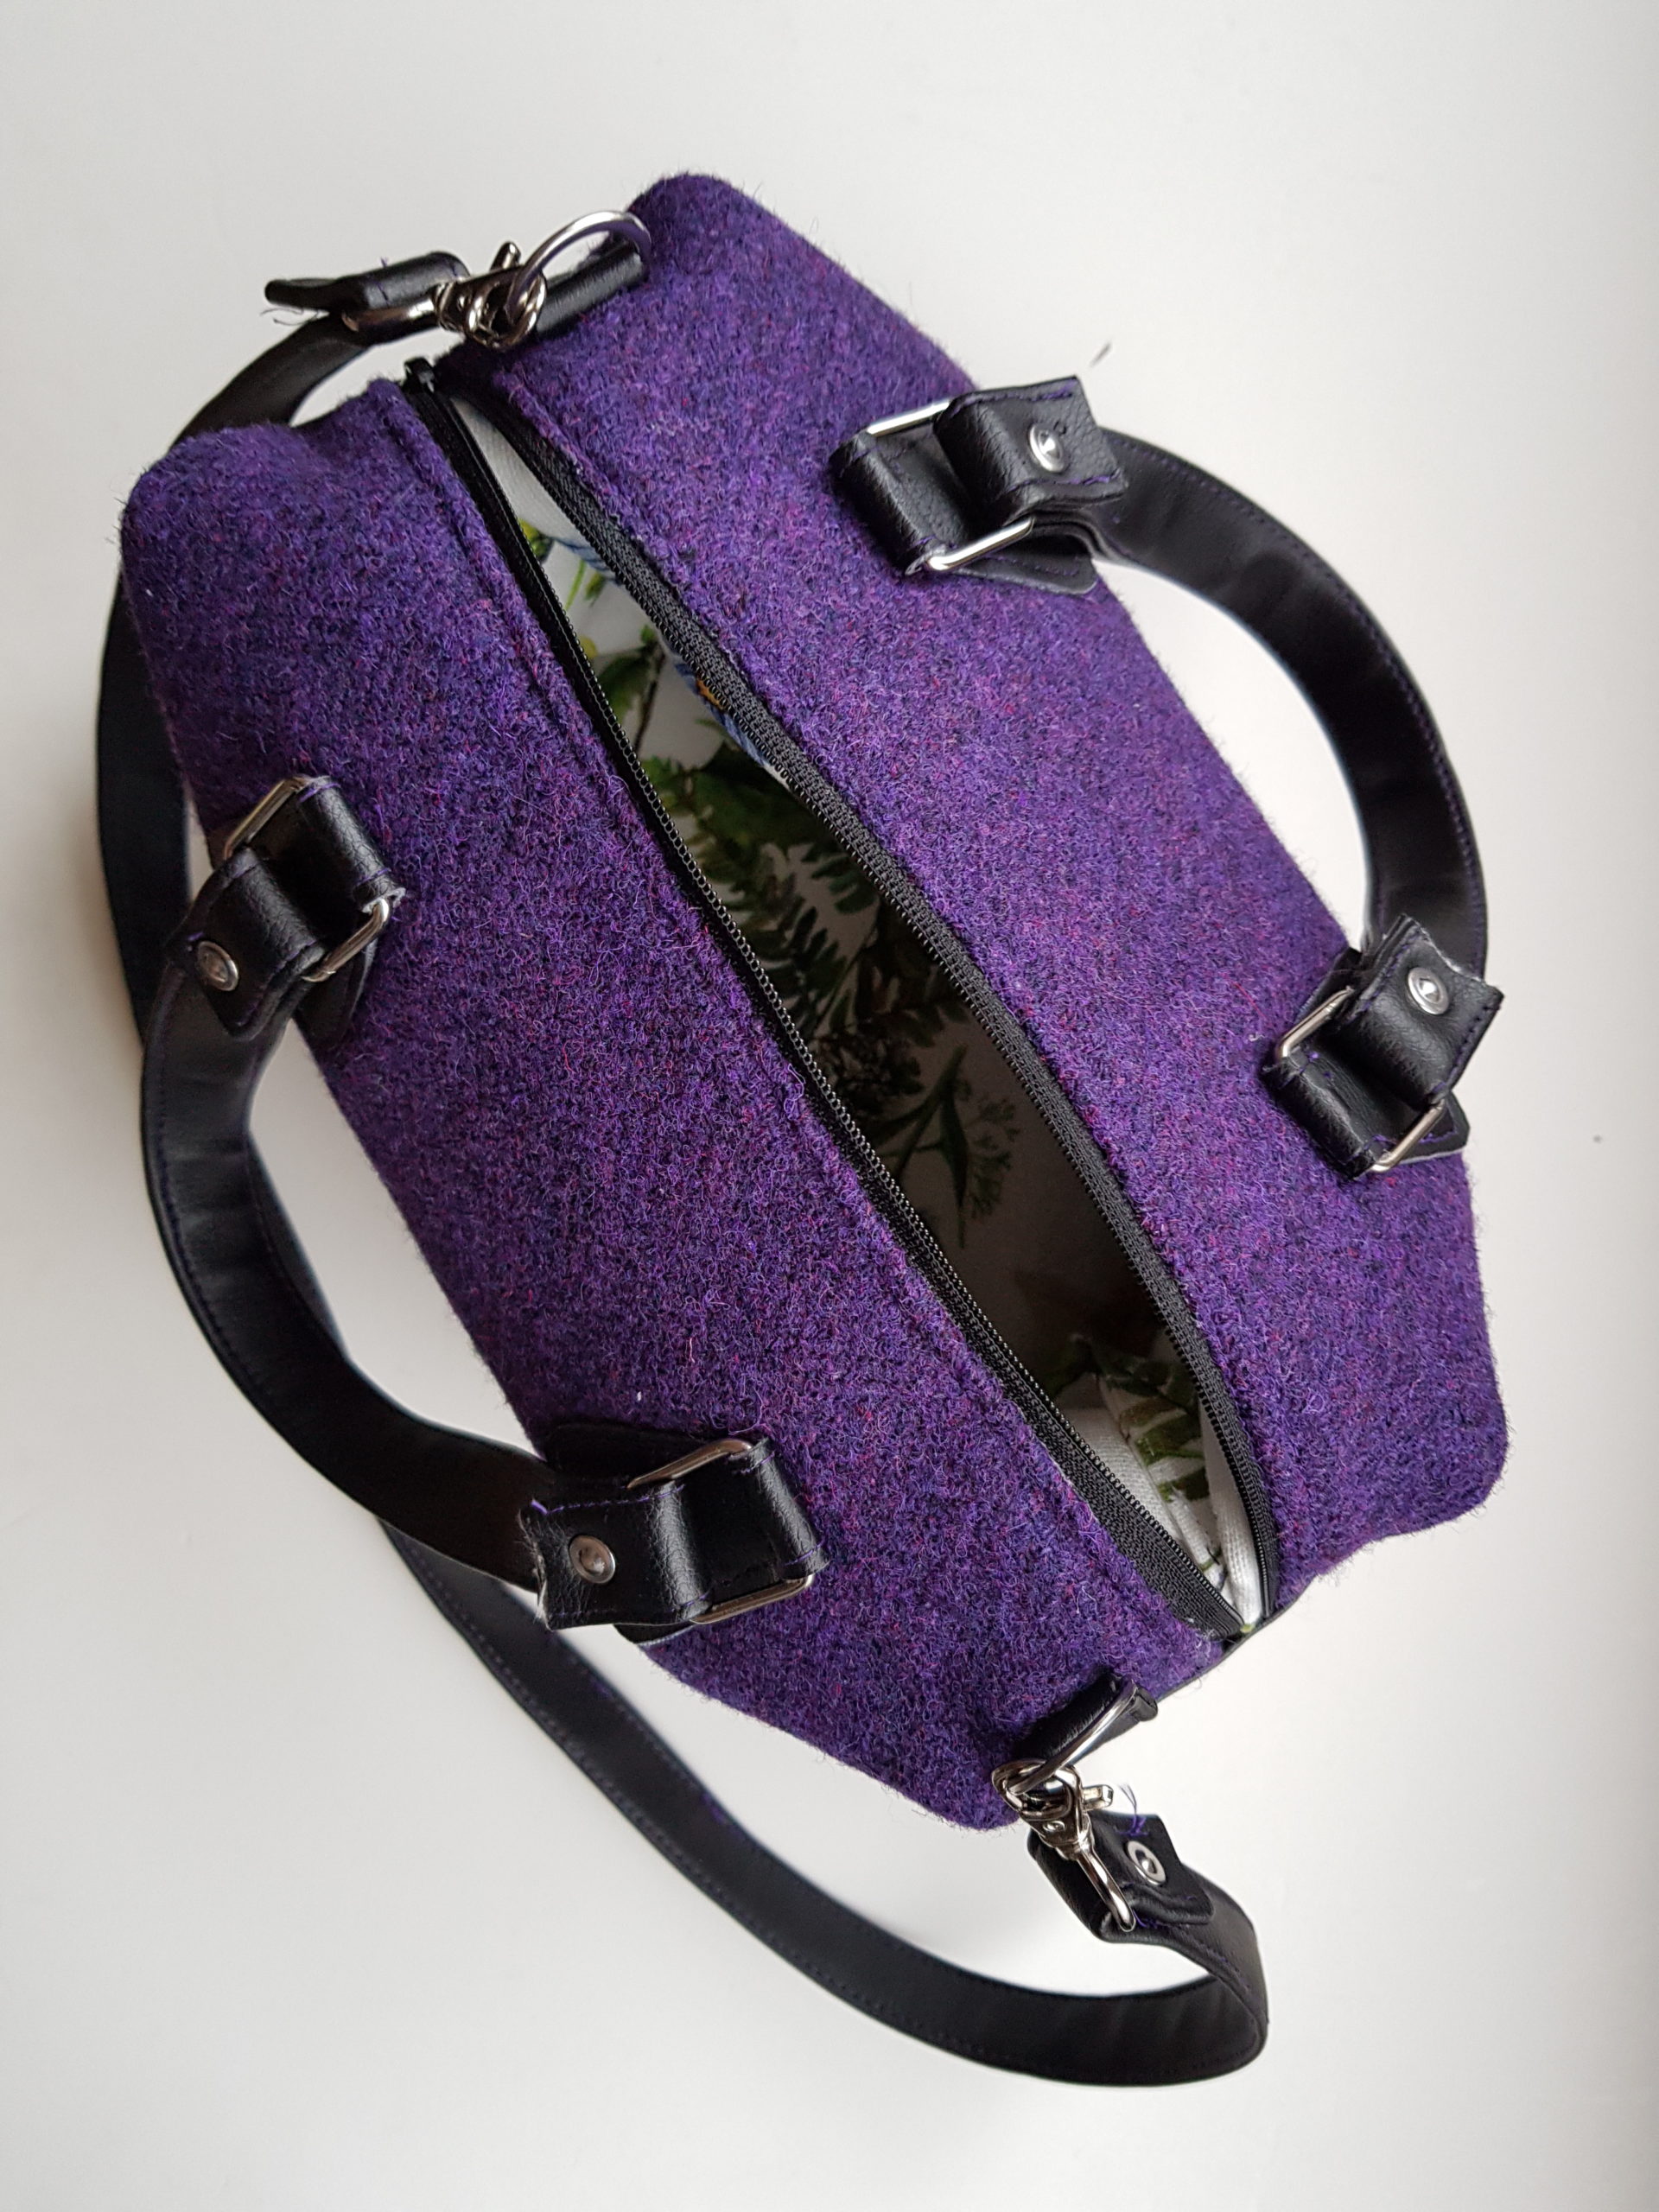 The purse as seen from above. The zipper is open so you can peek inside a little bit.